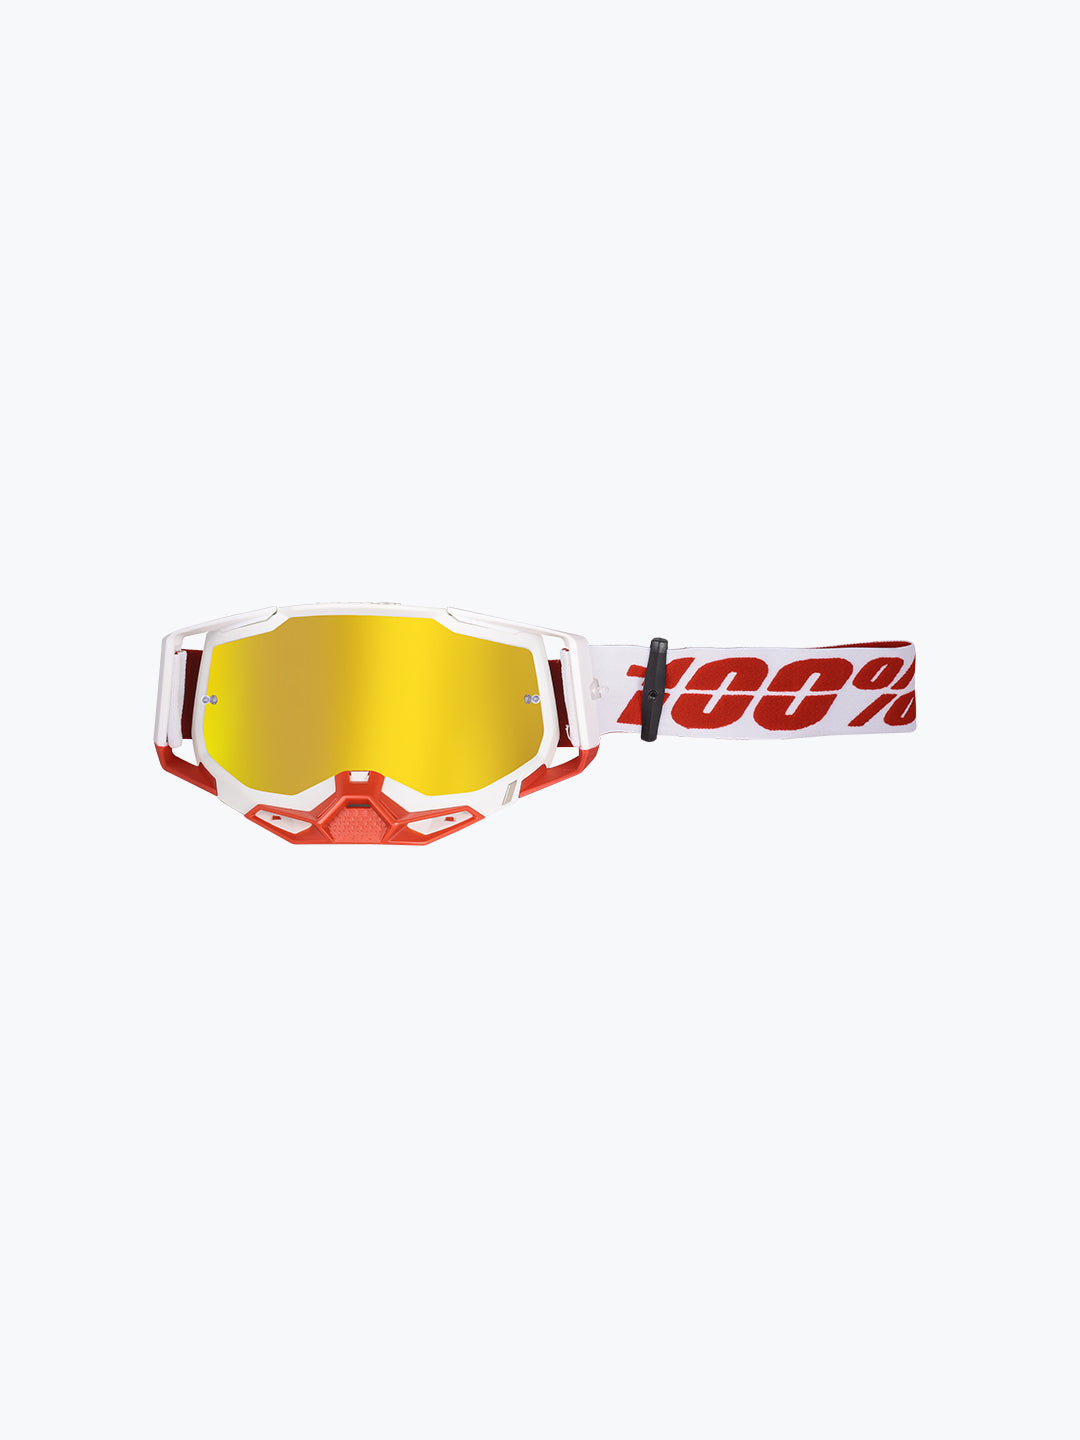 Goggles 100% - 212 White Gold Tint